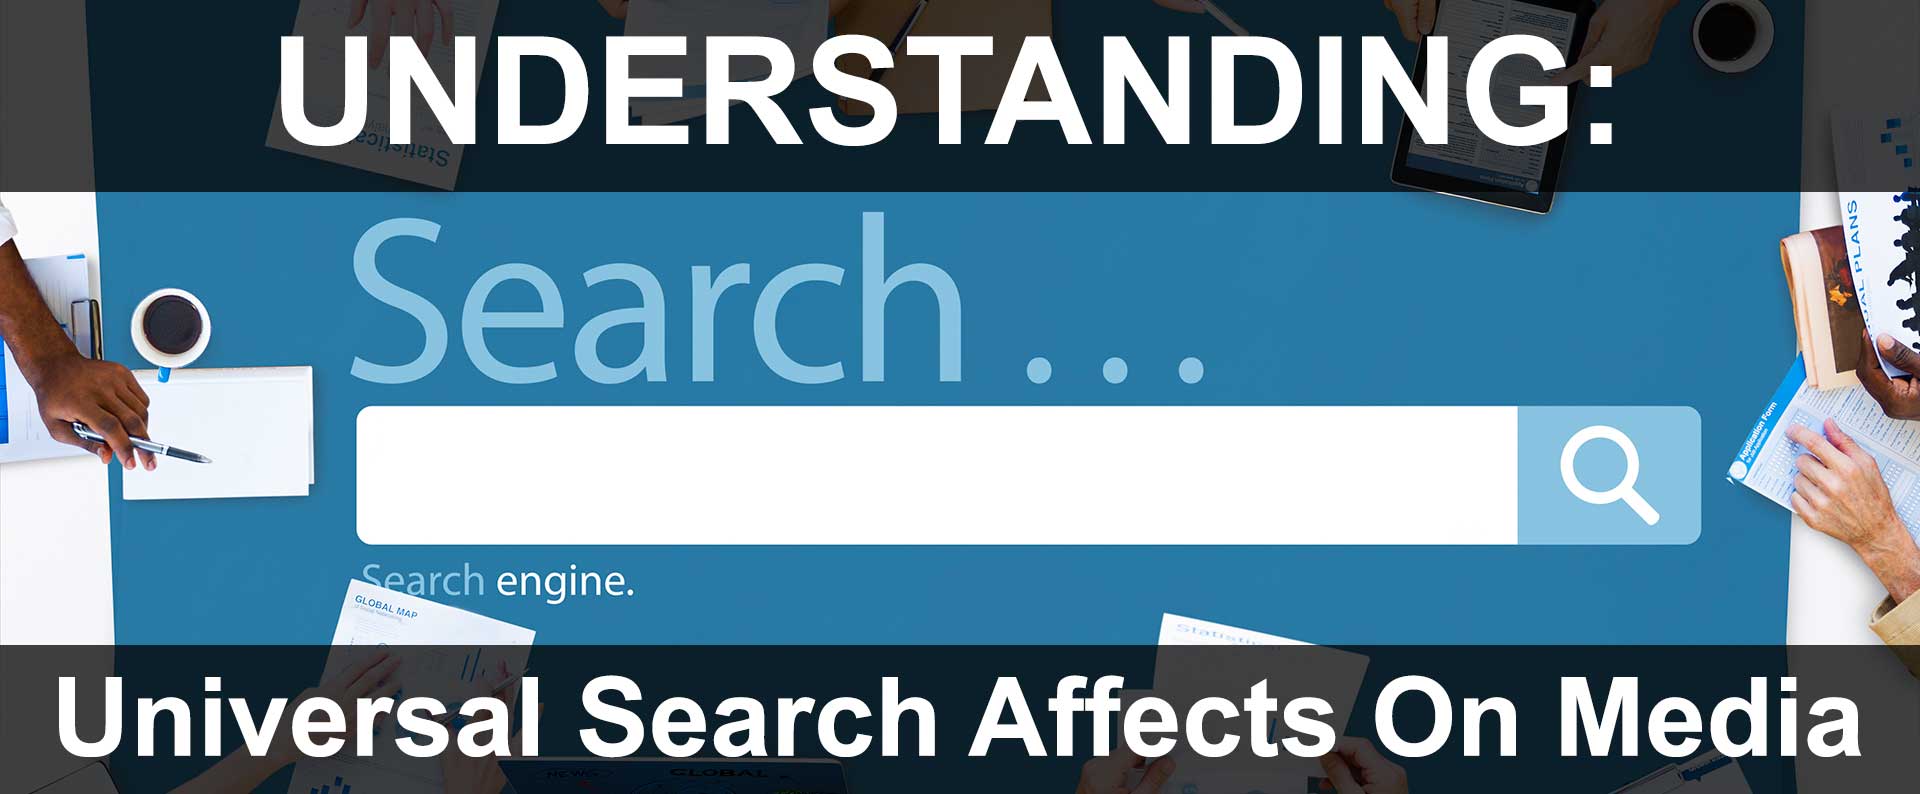 Understanding Universal Search For Optimal Media Marketing